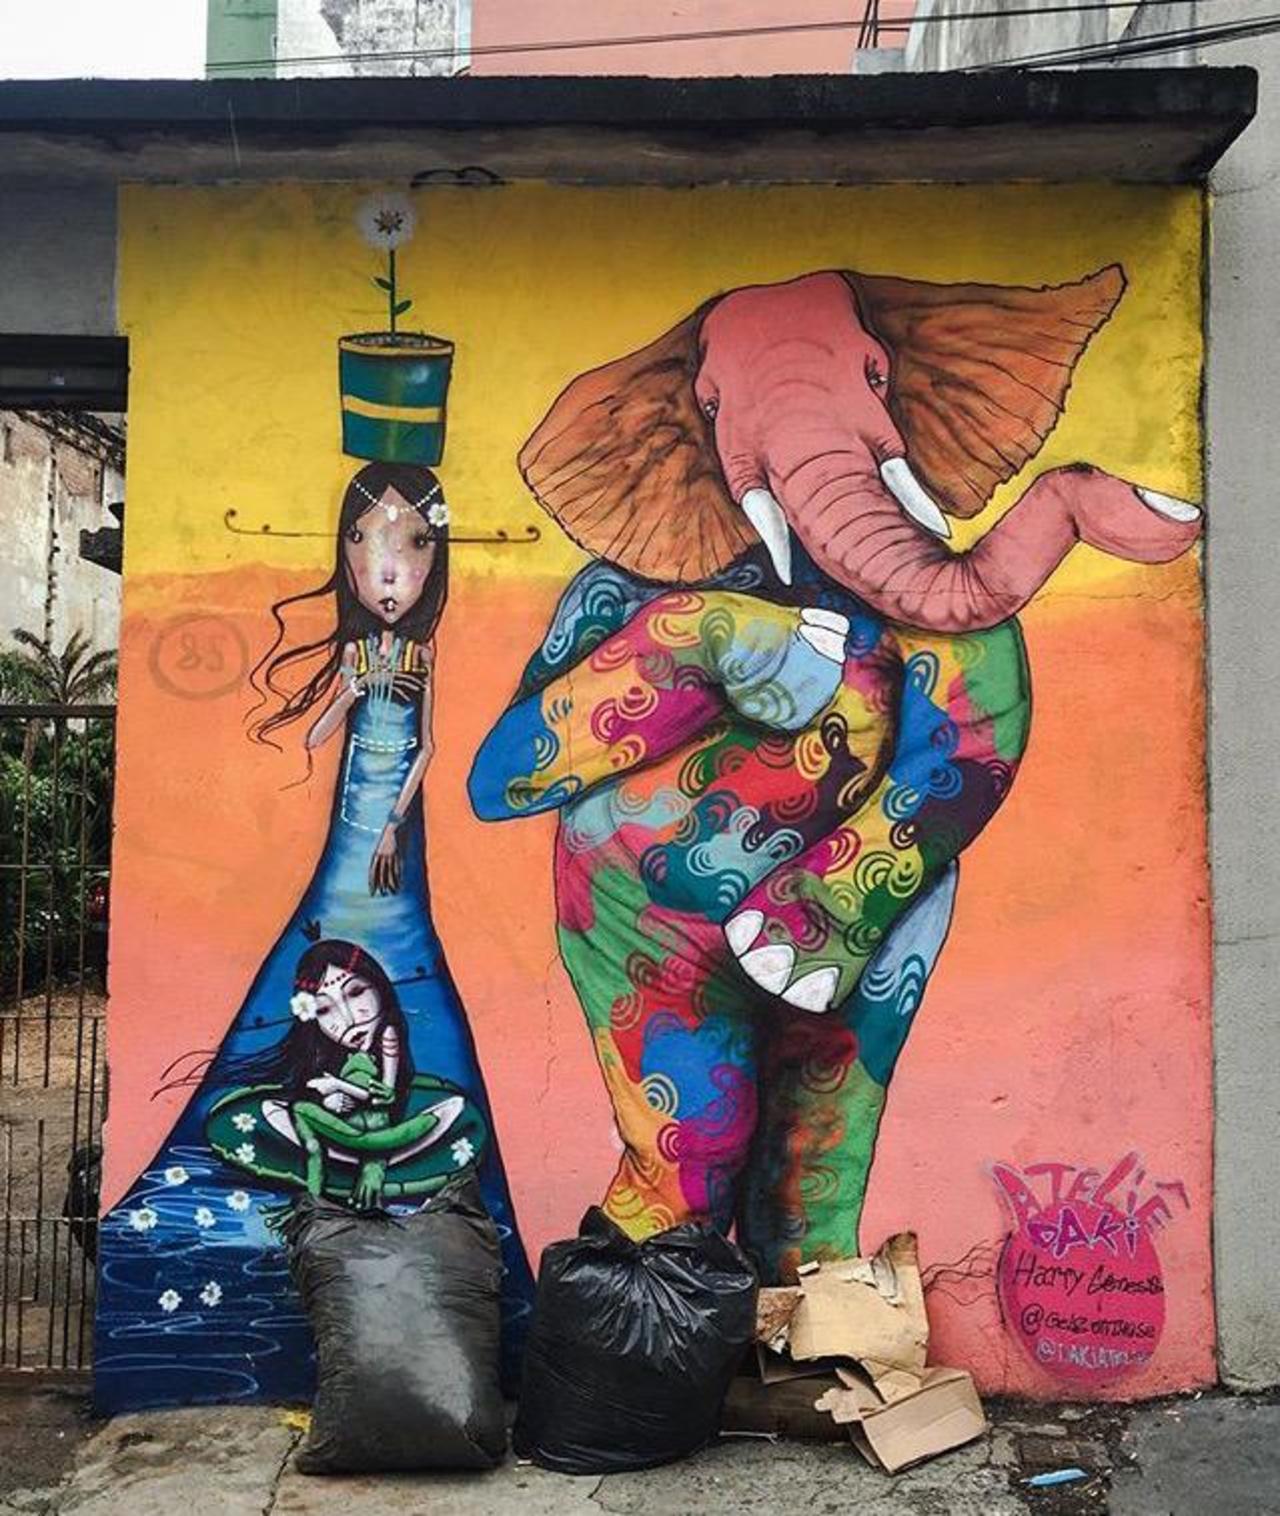 Street Art by Harry Geneis & Gelson in São Paulo #art #mural #graffiti #streetart http://t.co/SlLbhuMZfD … … … … http://twitter.com/charlesjackso14/status/648018008938541056